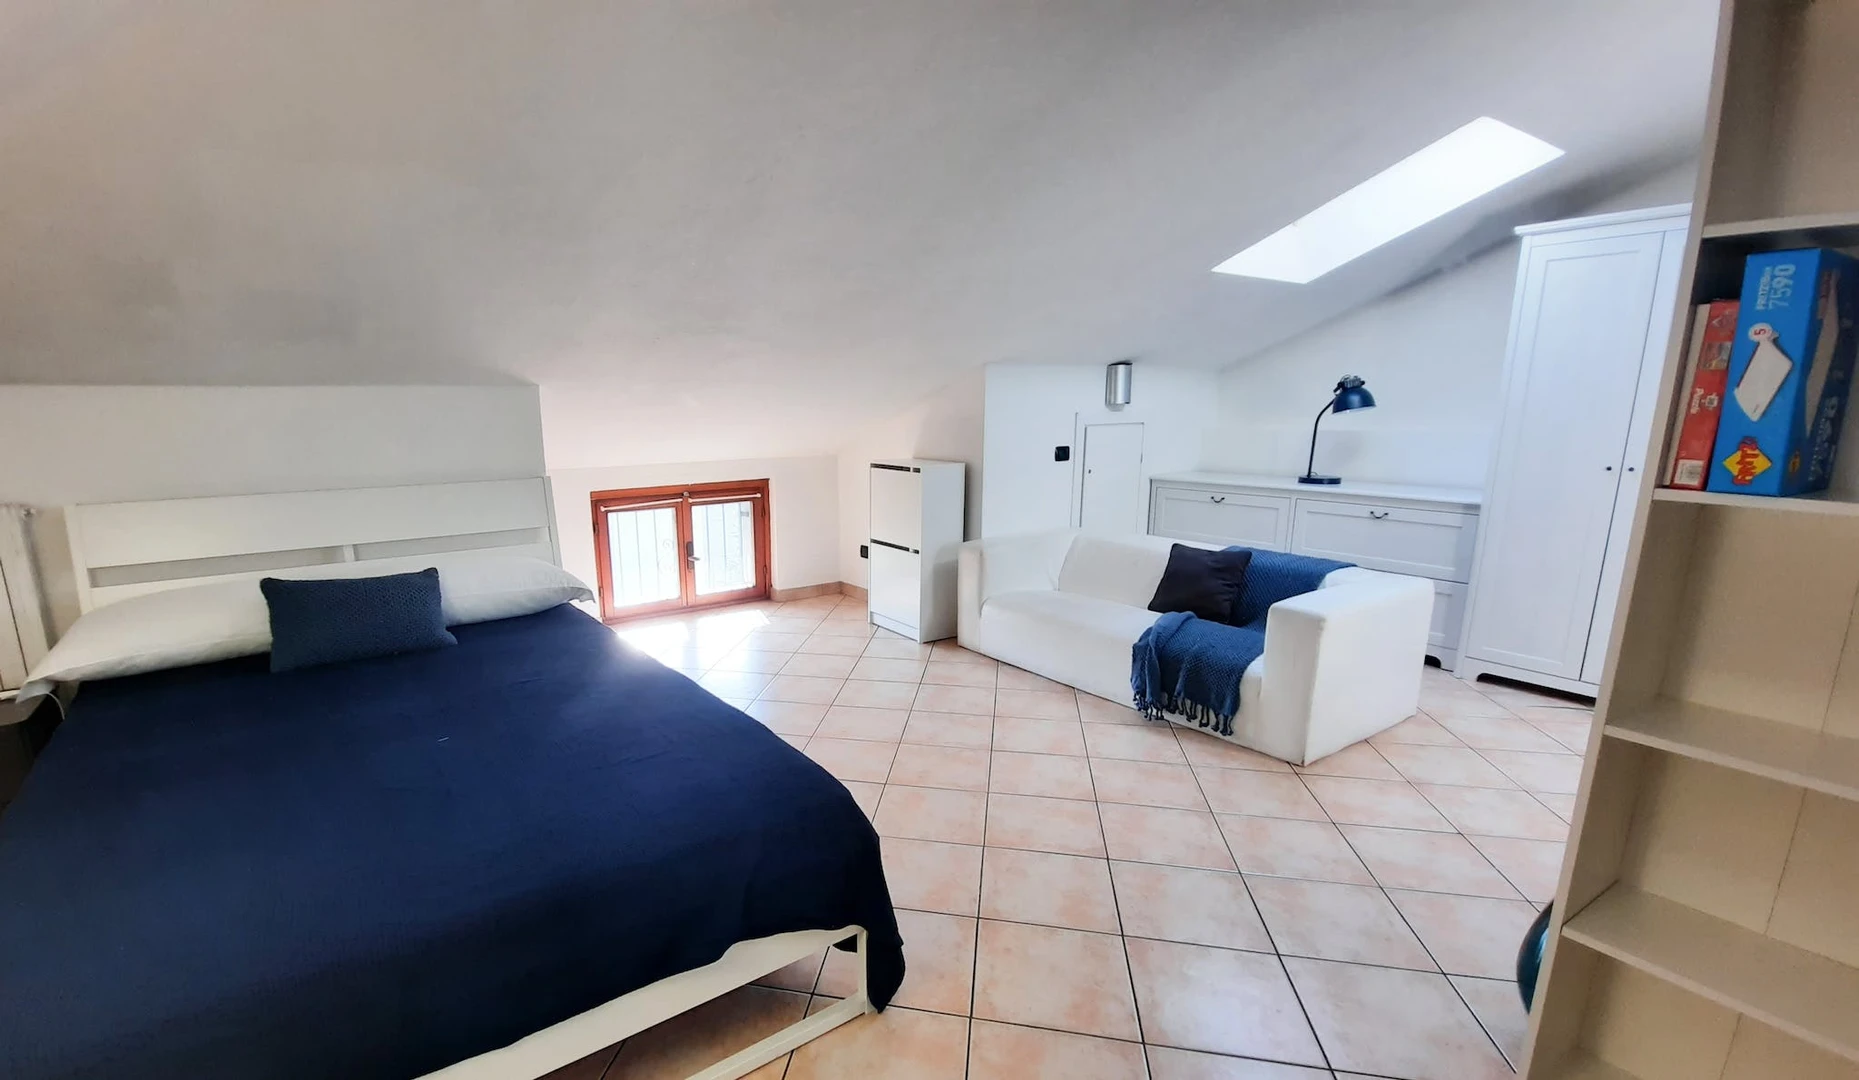 Shared room in 3-bedroom flat bergamo